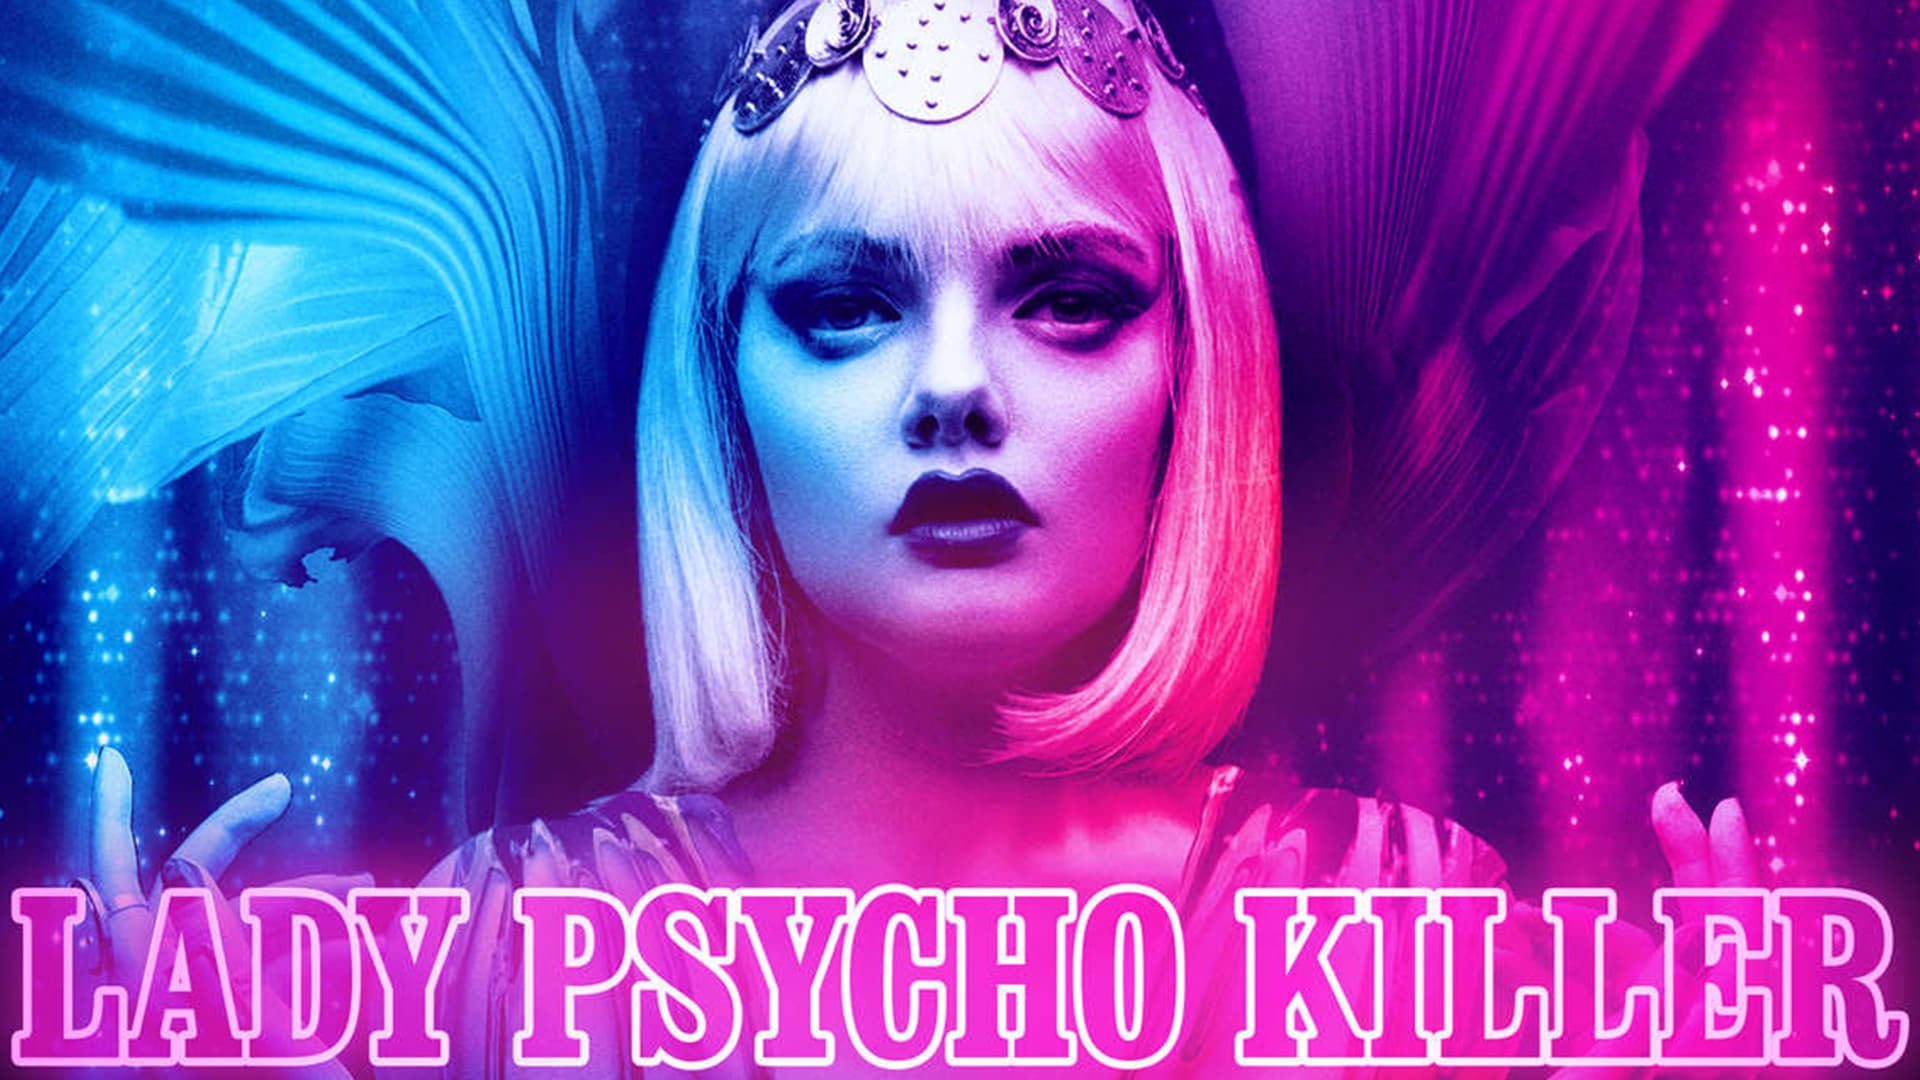 Lady Psycho Killer background